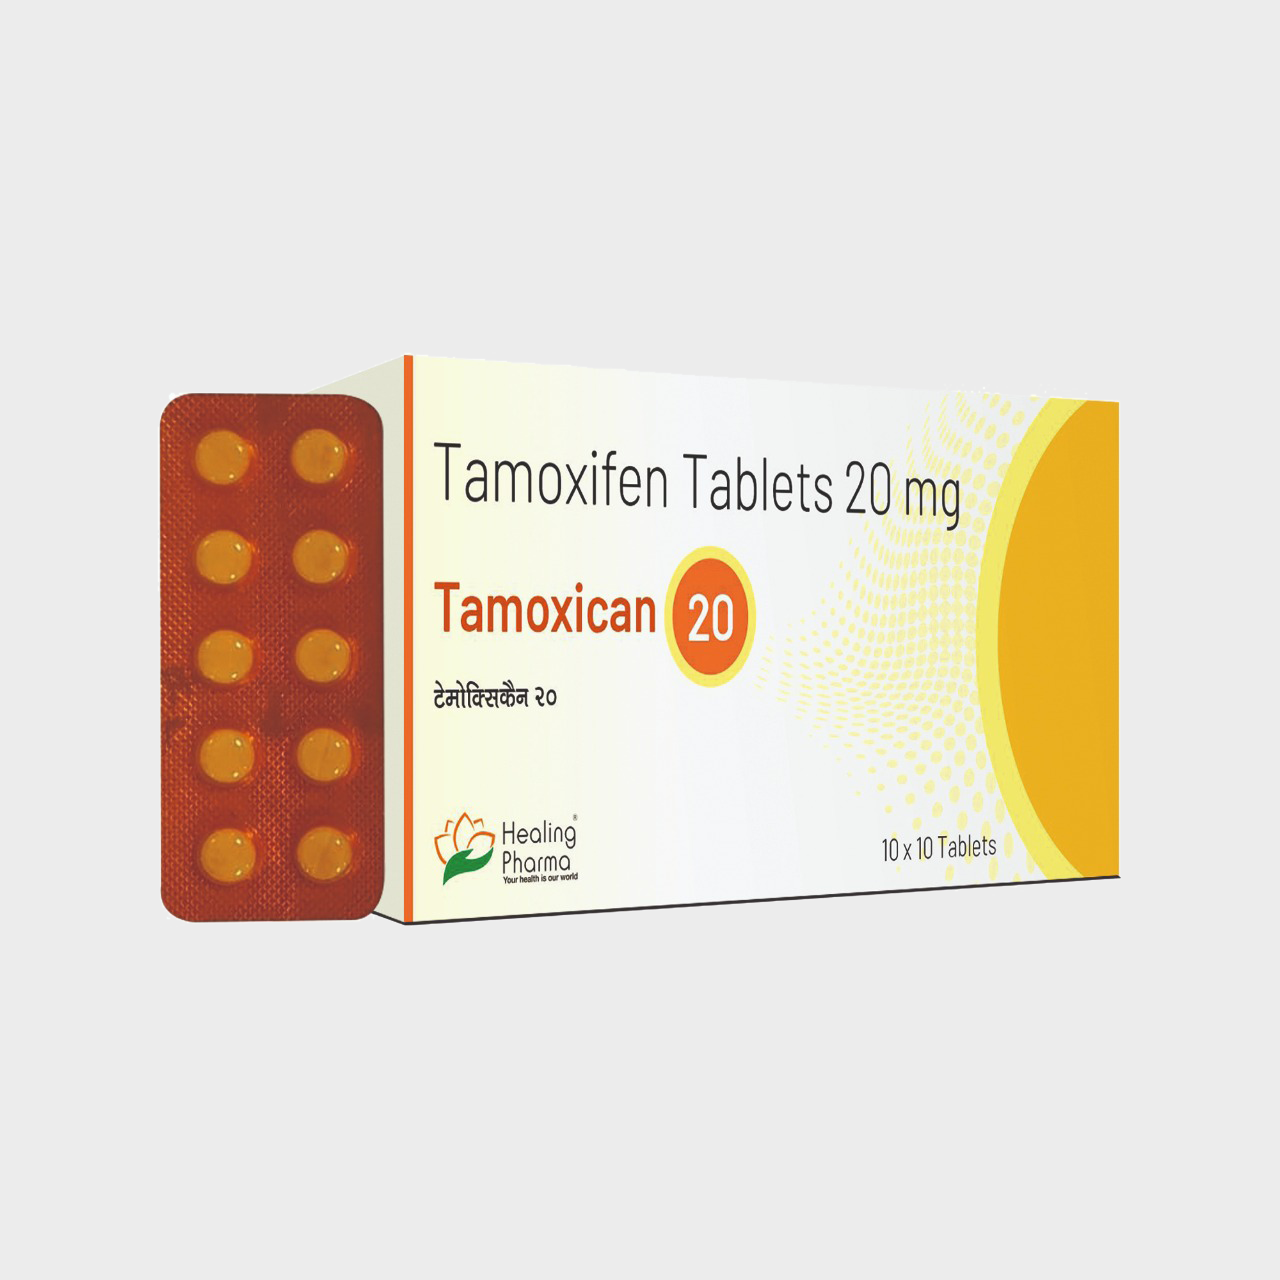 TAMOXICAN 20MG Tablets: Quality Tamoxifen for Hormonal Health